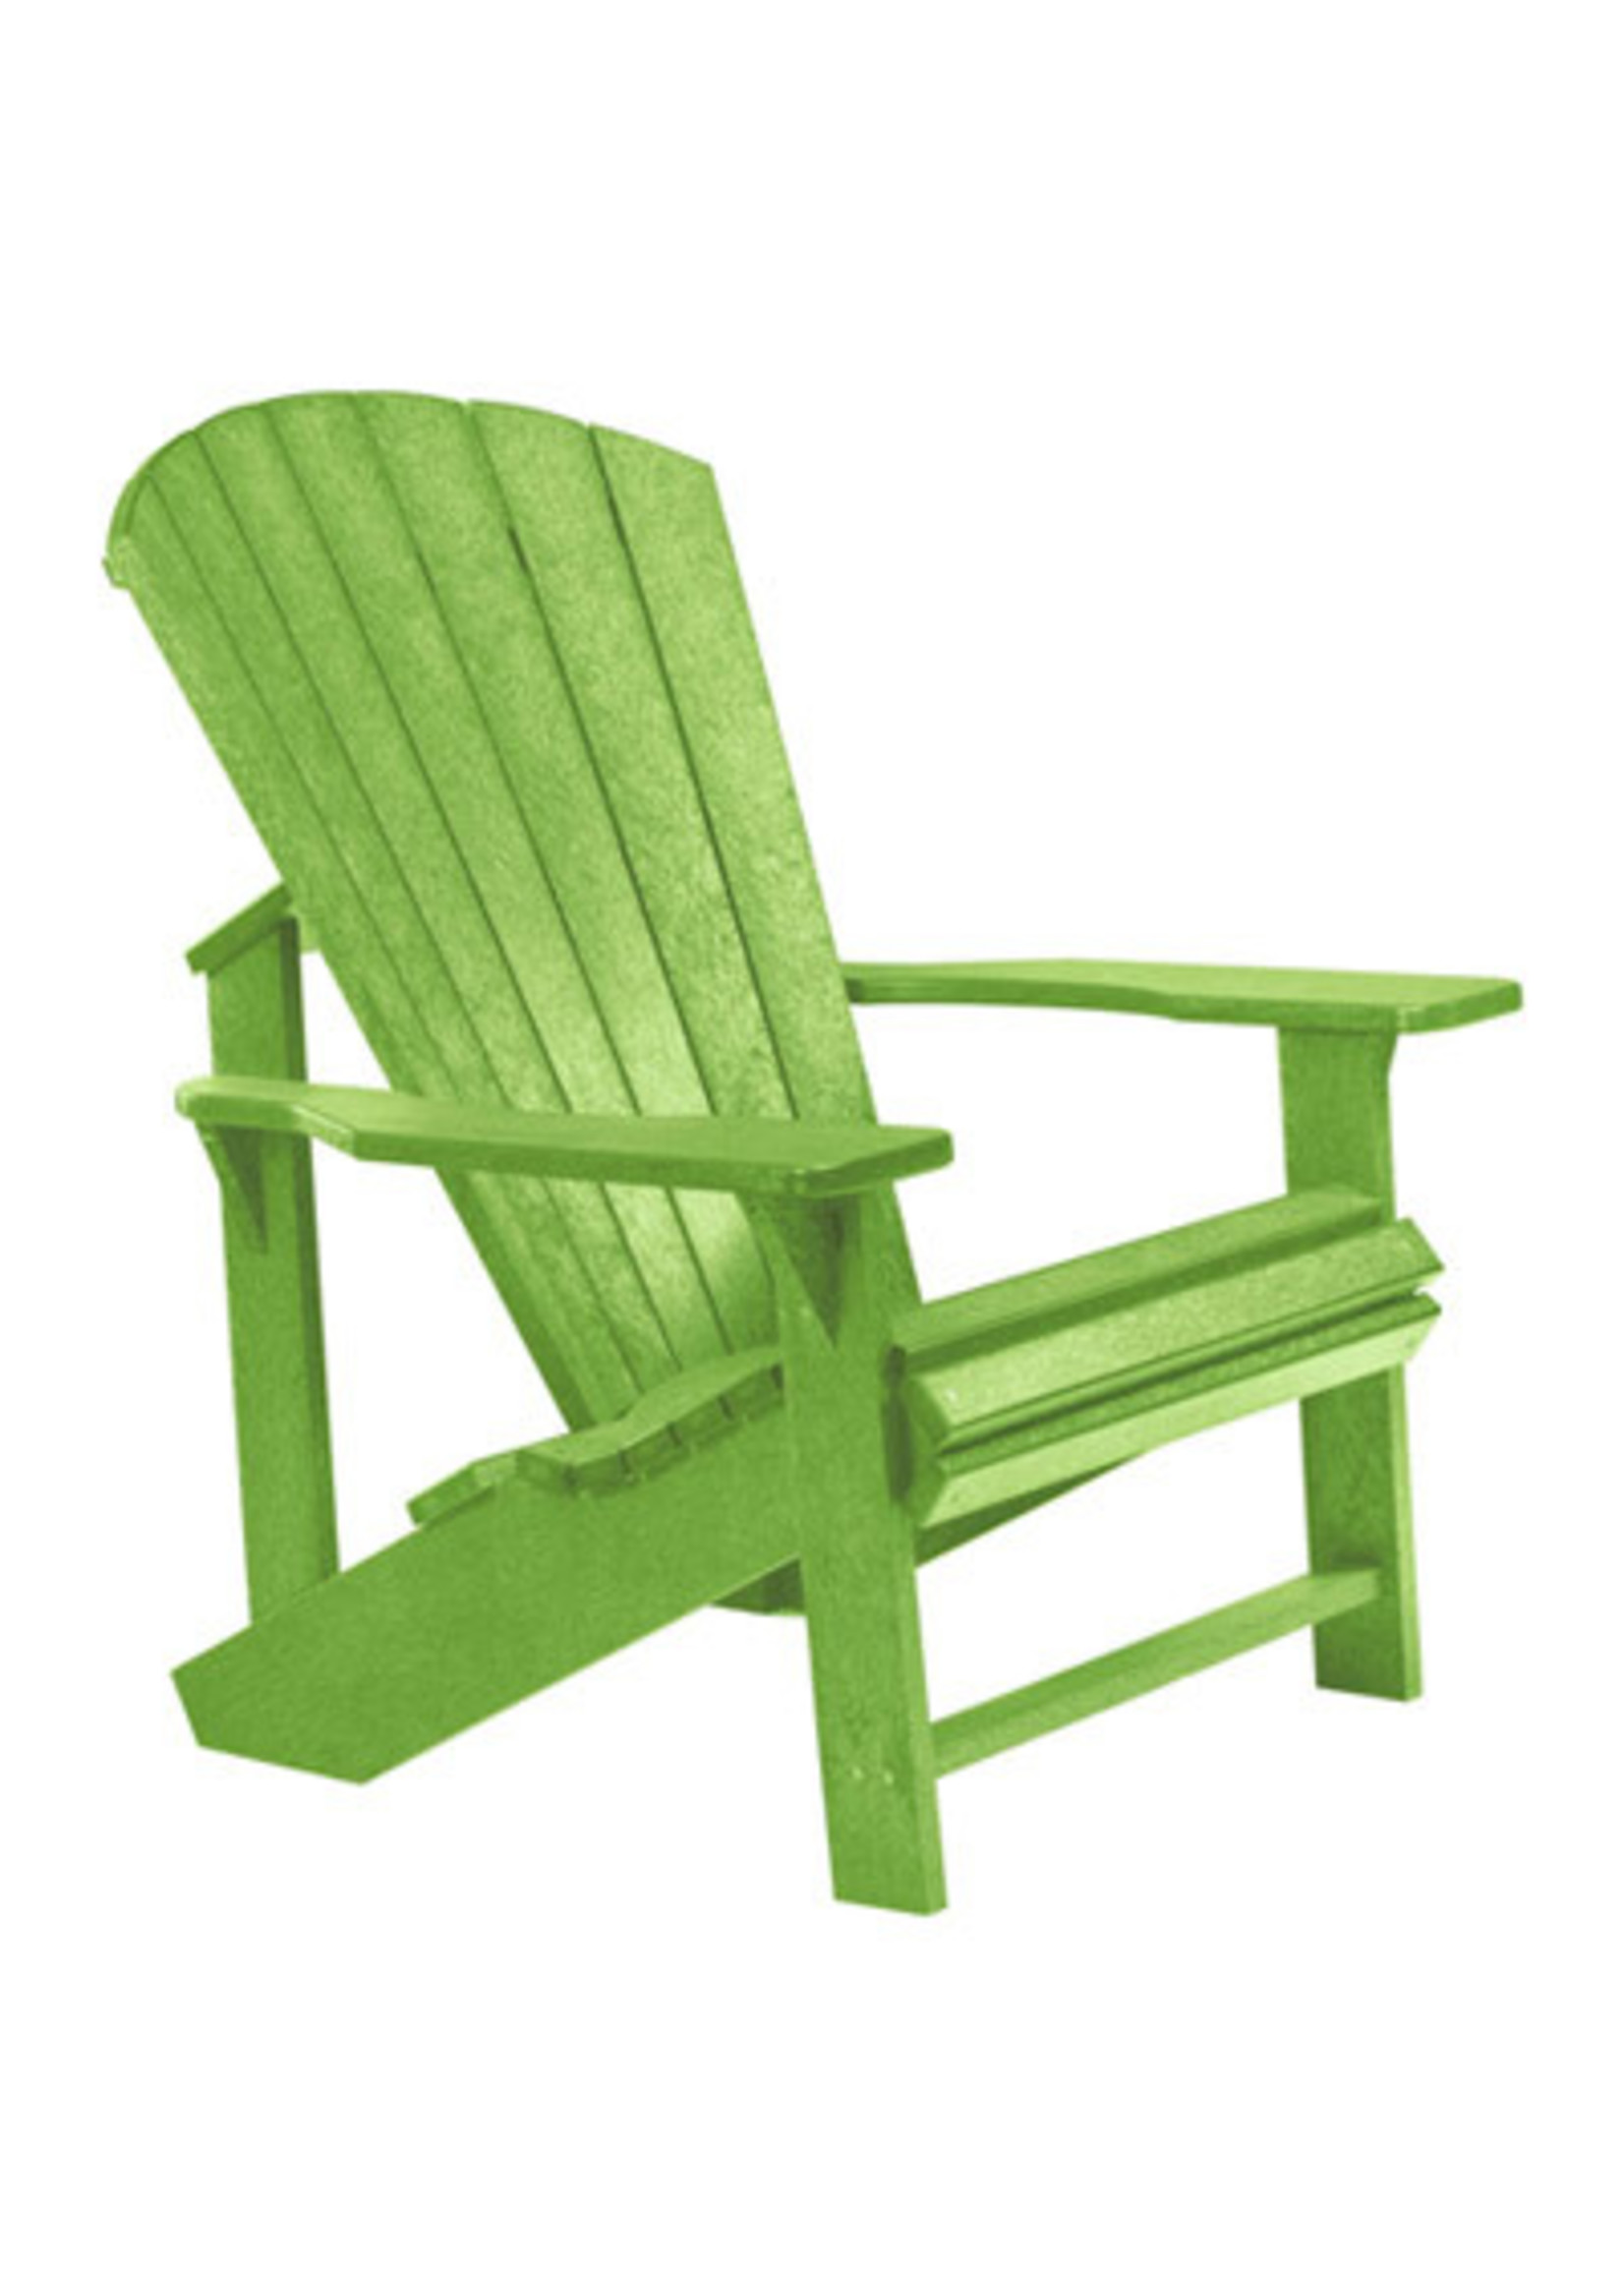 C.R. Plastic Products C01 * Classic Adirondack Chair, Generation Line